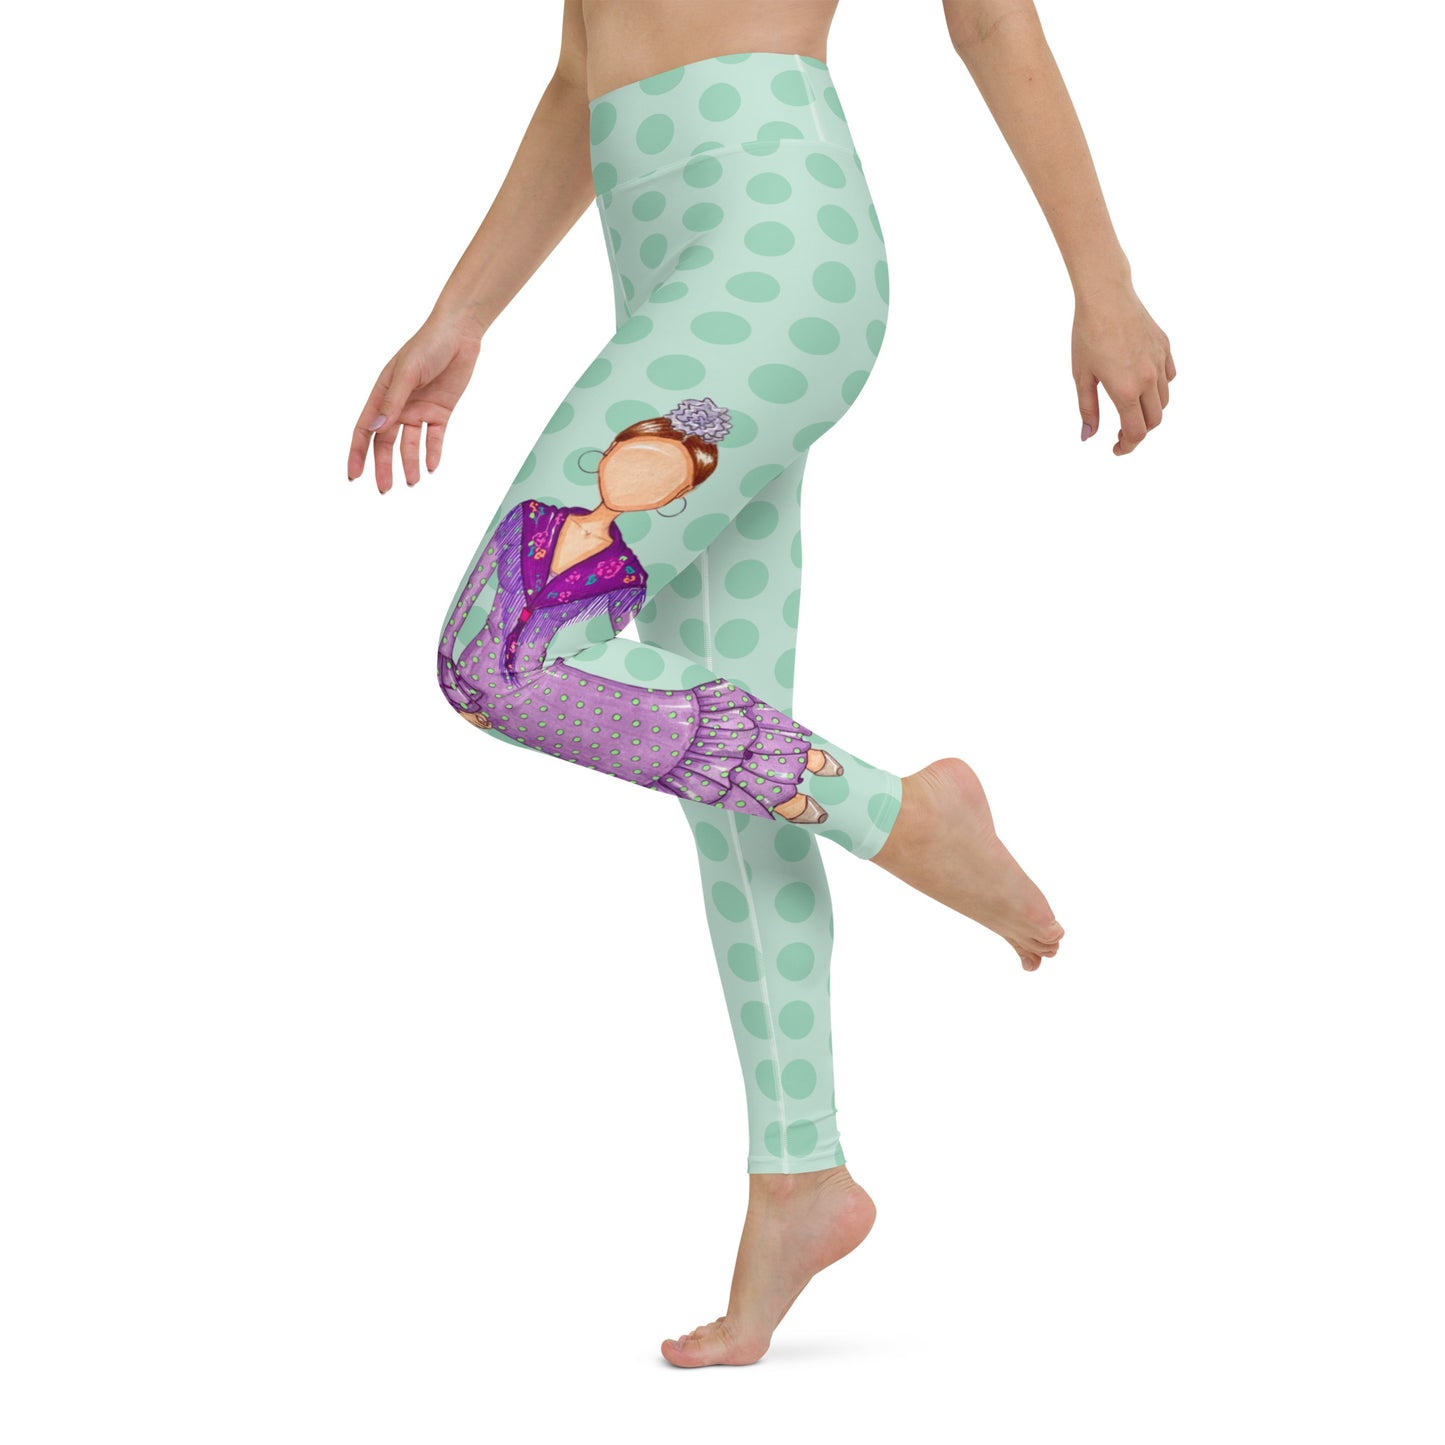 Flamenco Dancer Leggings, green with green polka dots high waisted yoga leggings with a purple dress design - IllustrArte